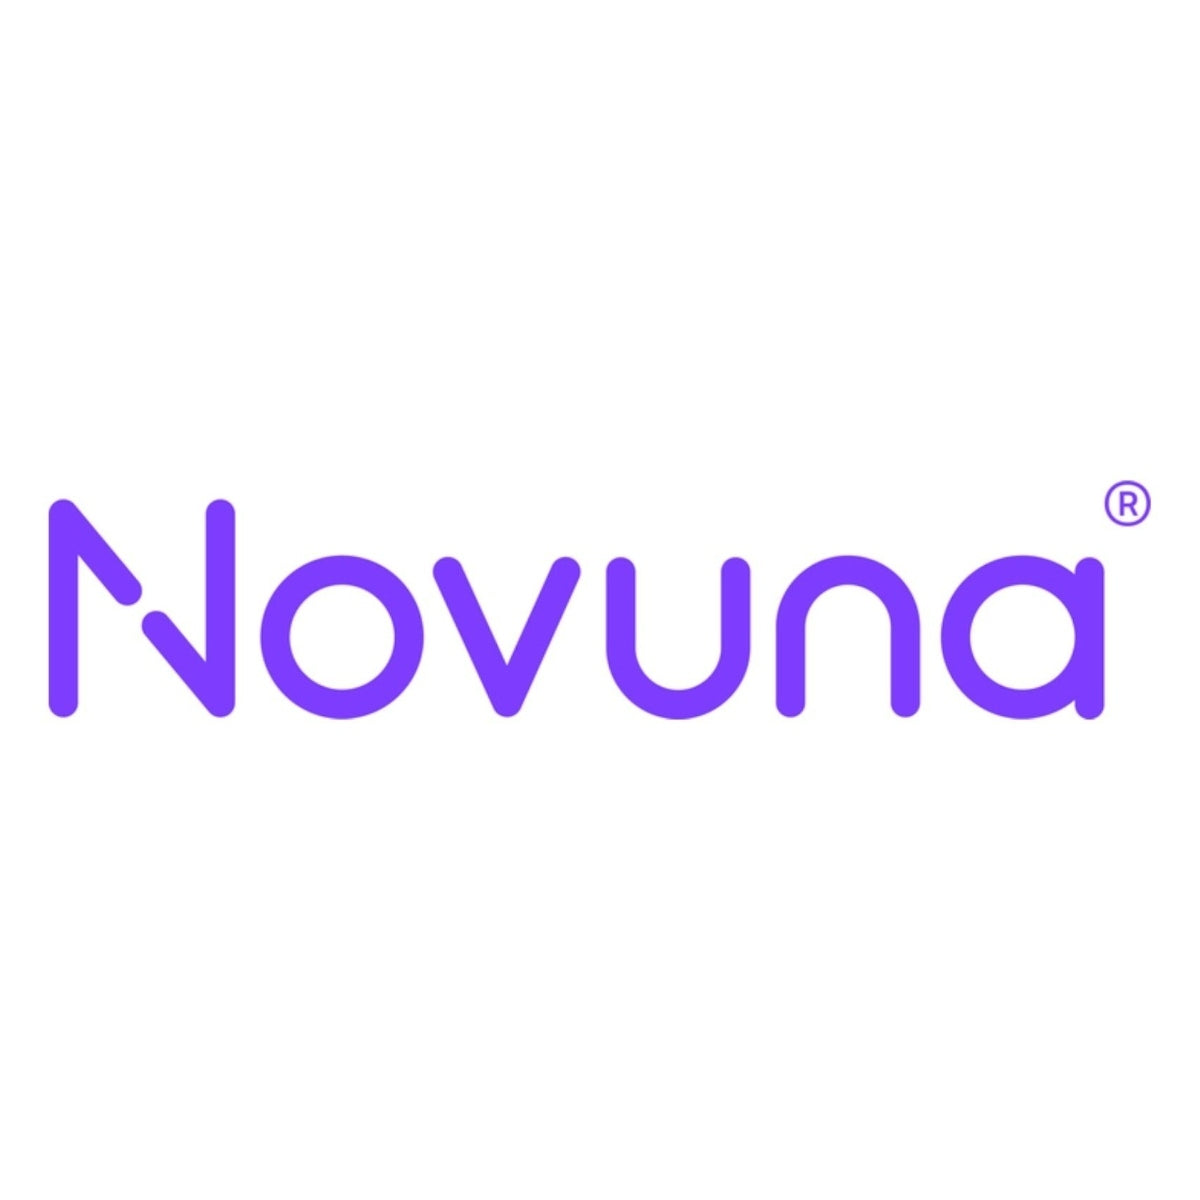 Novuna Personal Finance MsgApp